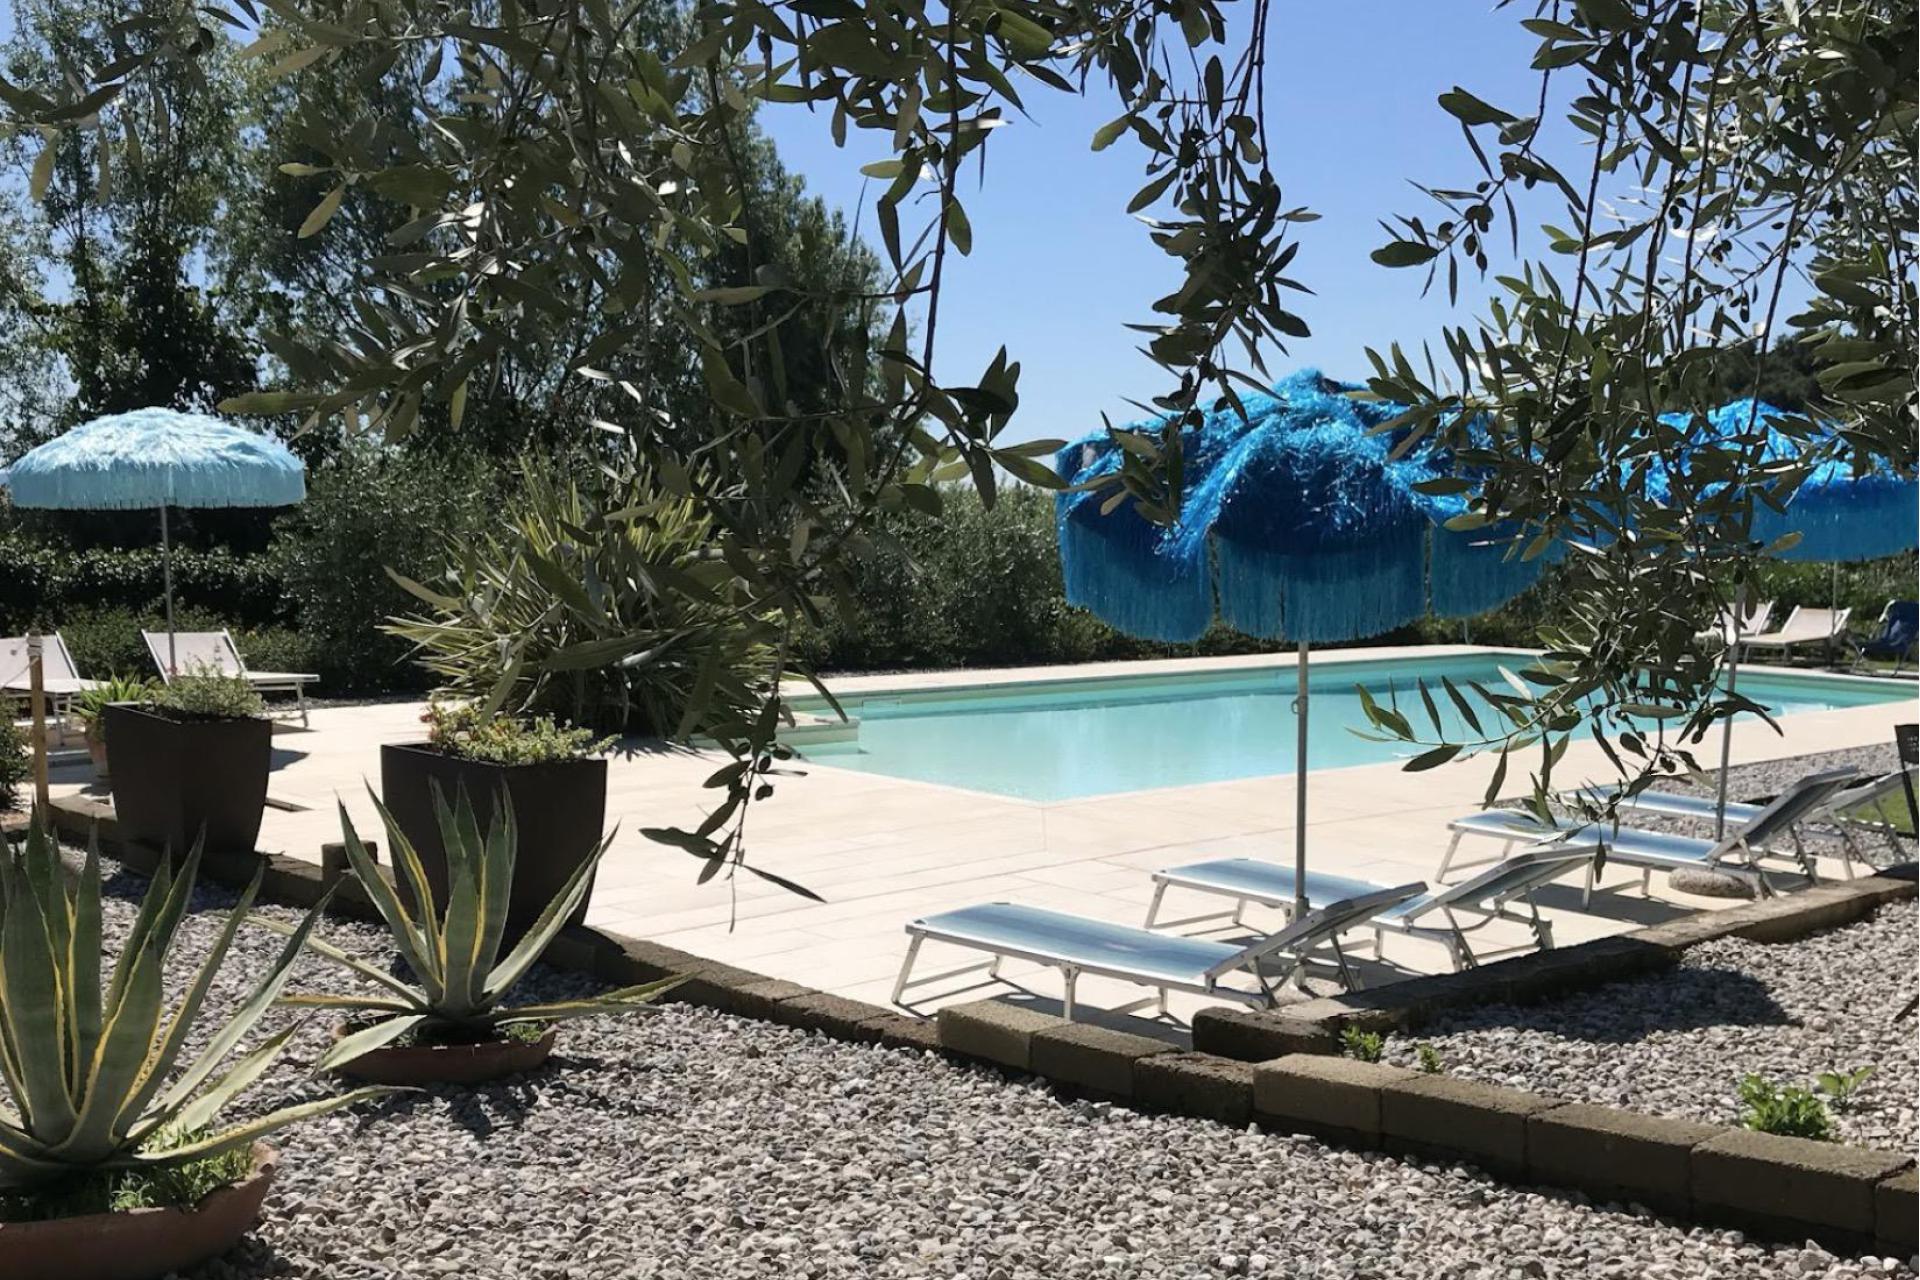 Agriturismo Lake Como and Lake Garda Small cozy agriturismo in an olive grove near Lake Garda